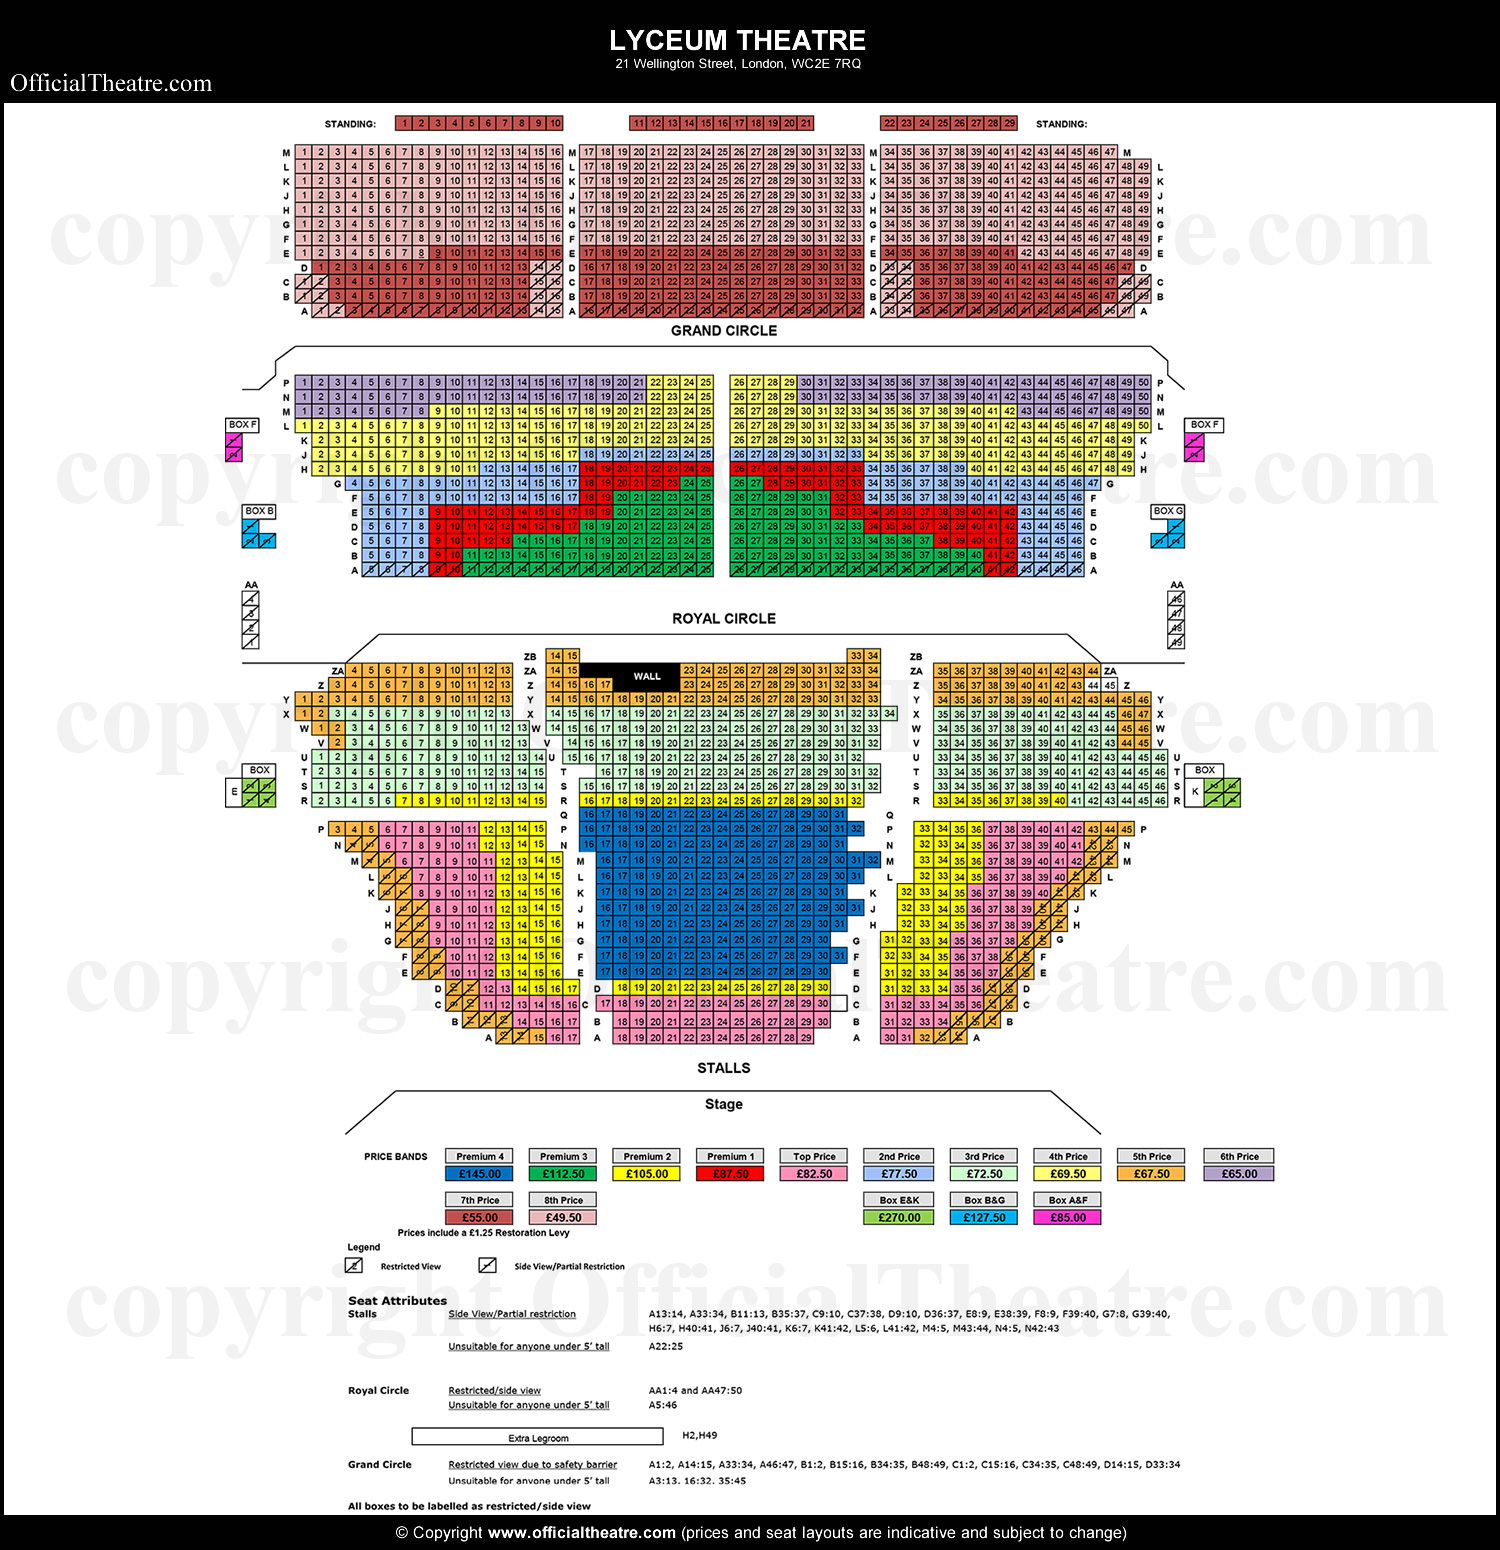 Lyceum Theatre seating plan